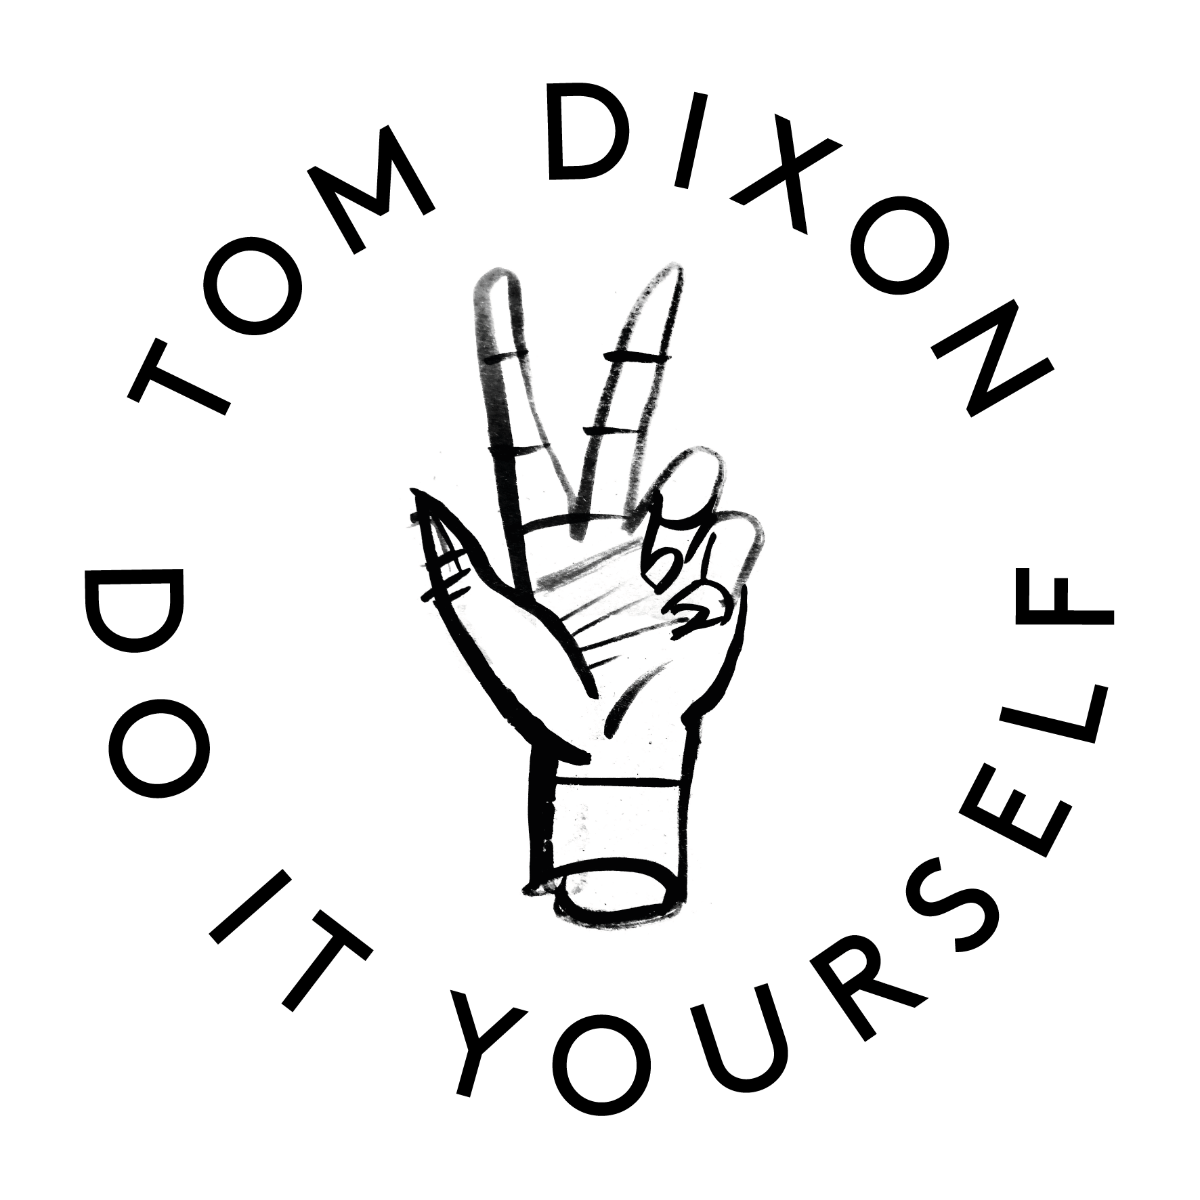 Tom Dixon Do It Yourself logo